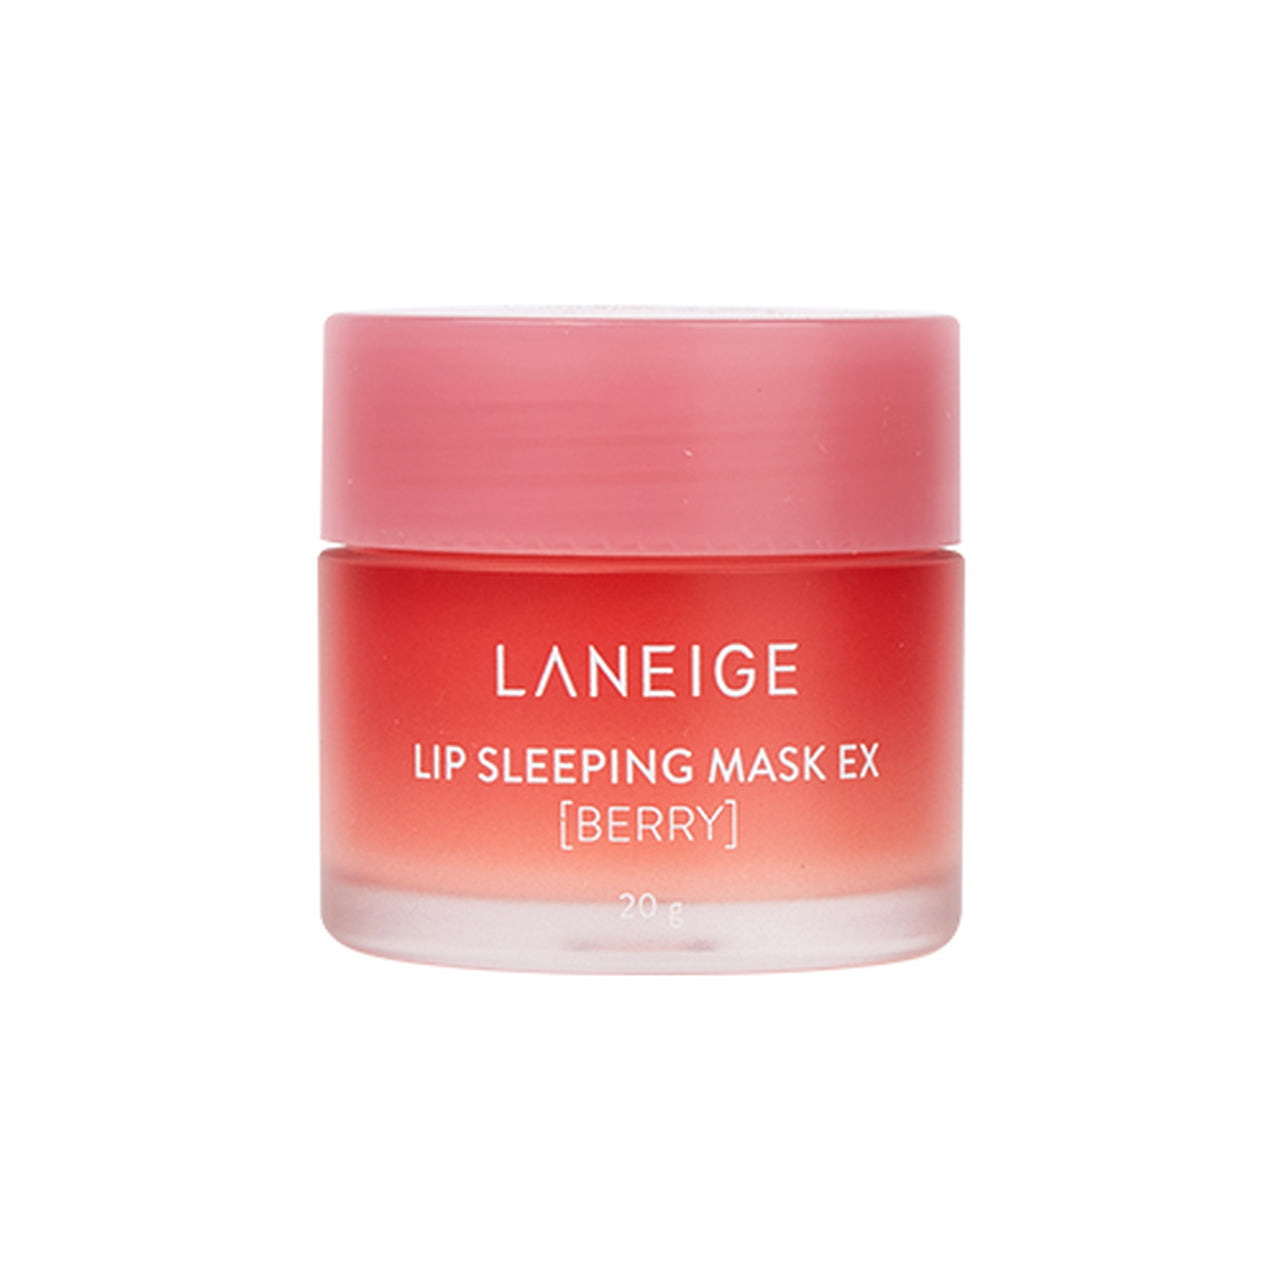 Laneige Lip Sleeping Mask EX - Berry Beauty Laneige   